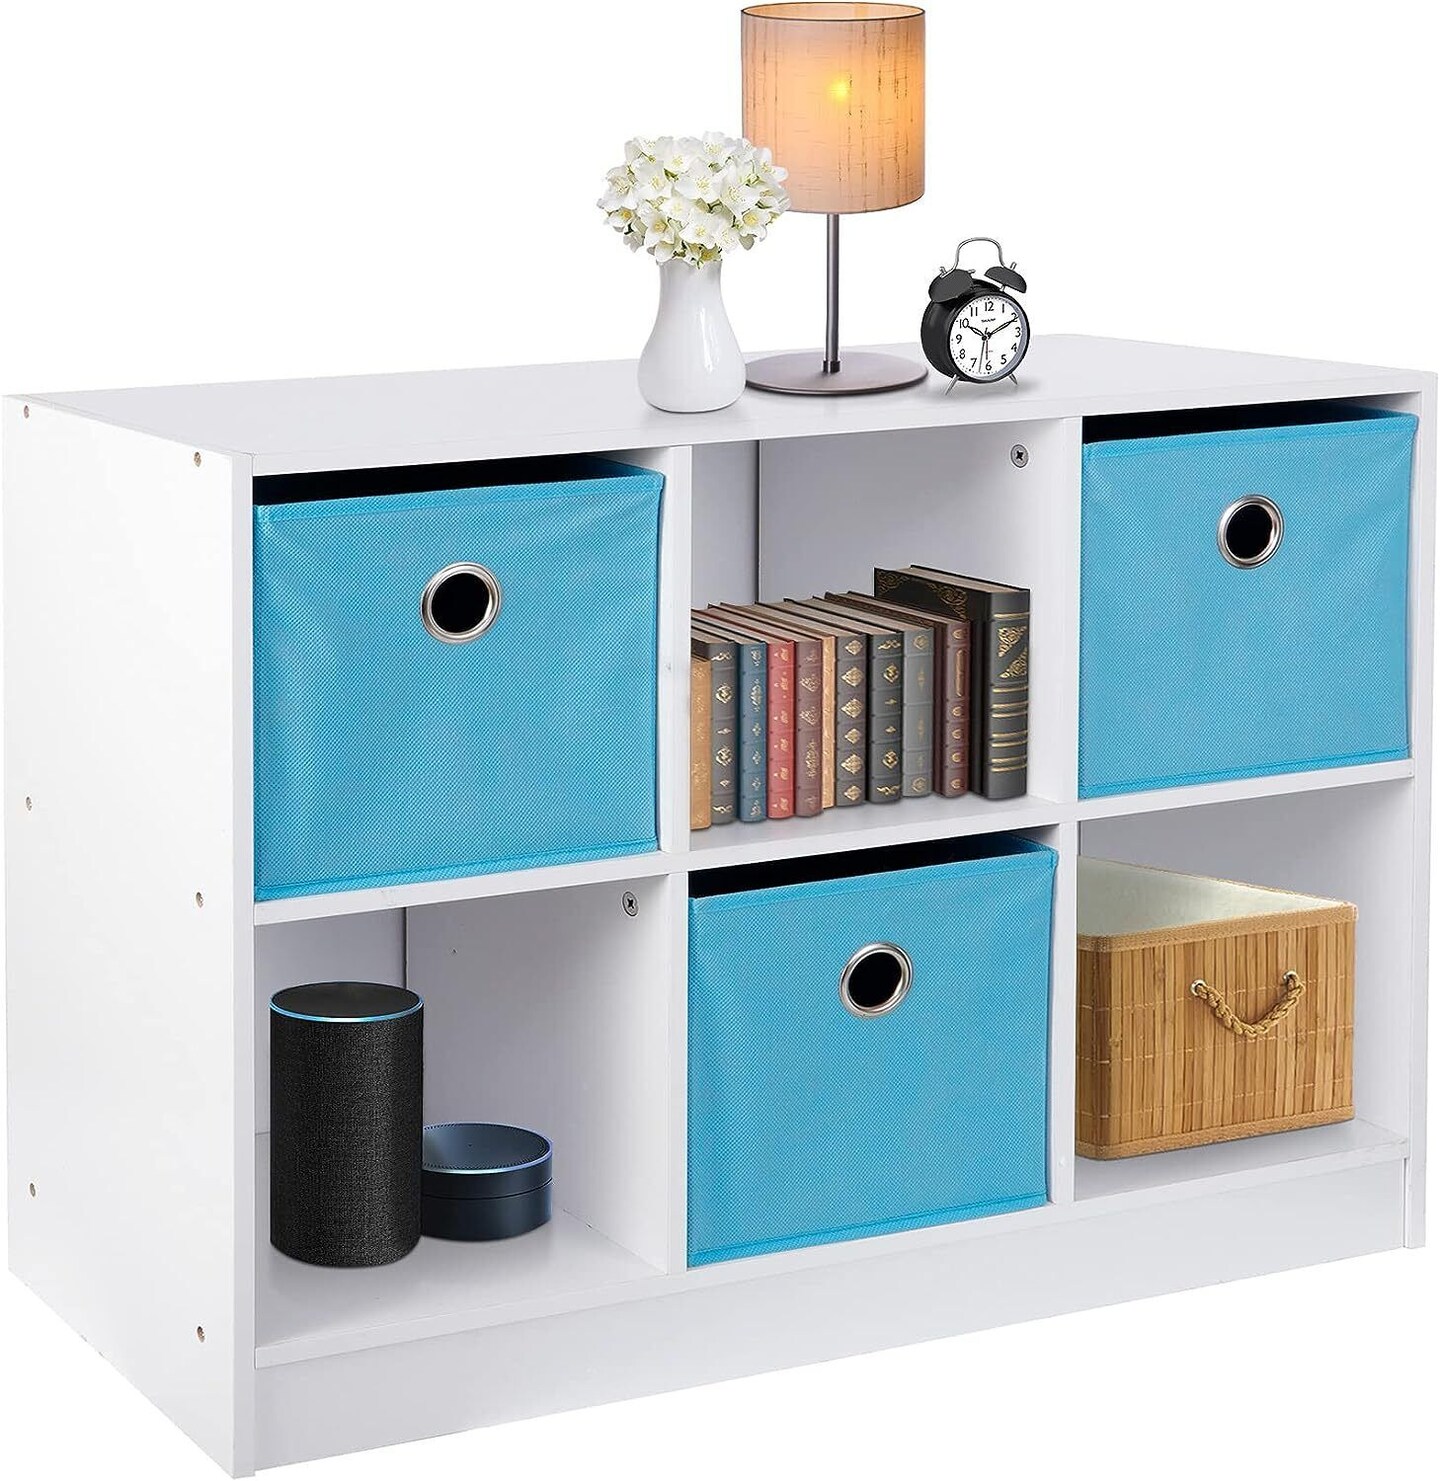 6 Cube Storage Organizer Display Wood Bookshelf Bookcase Cabinet.